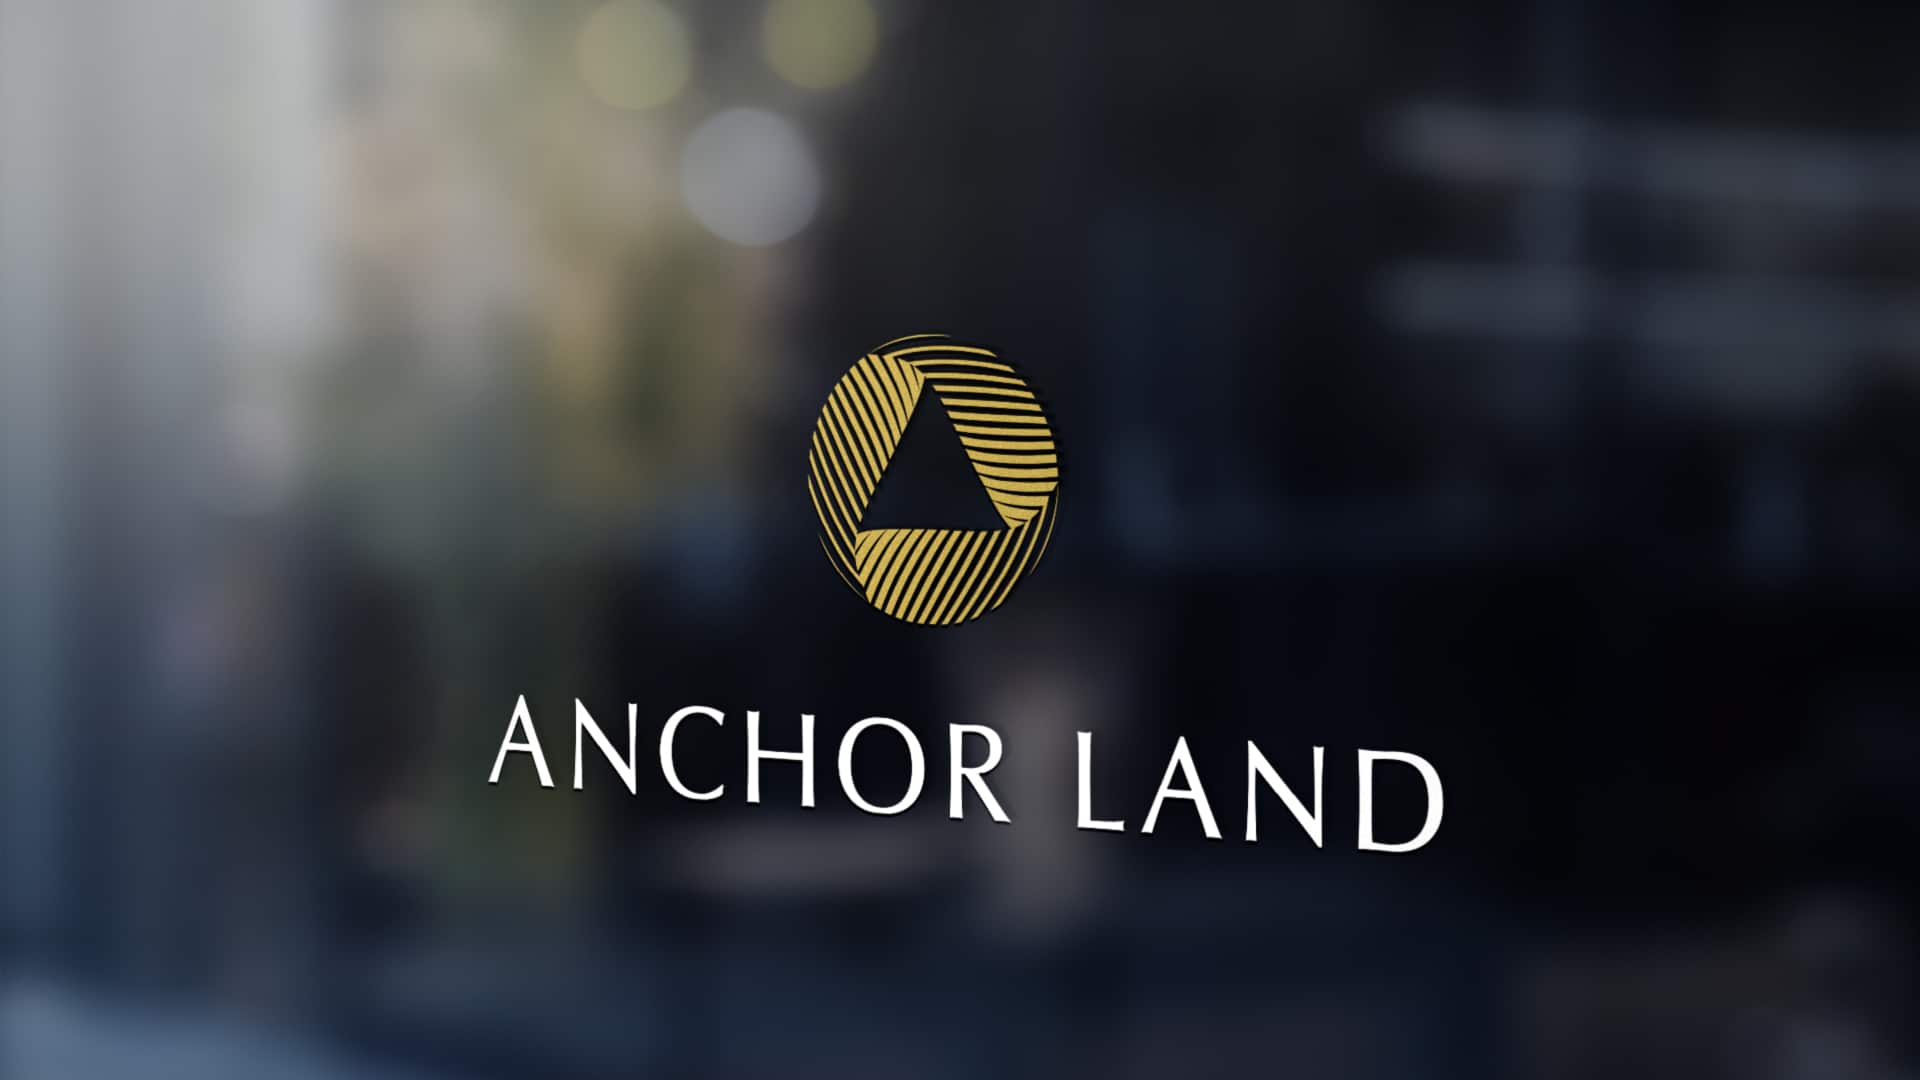 Gold foil window decal and logo design for property developer brand Anchor Land